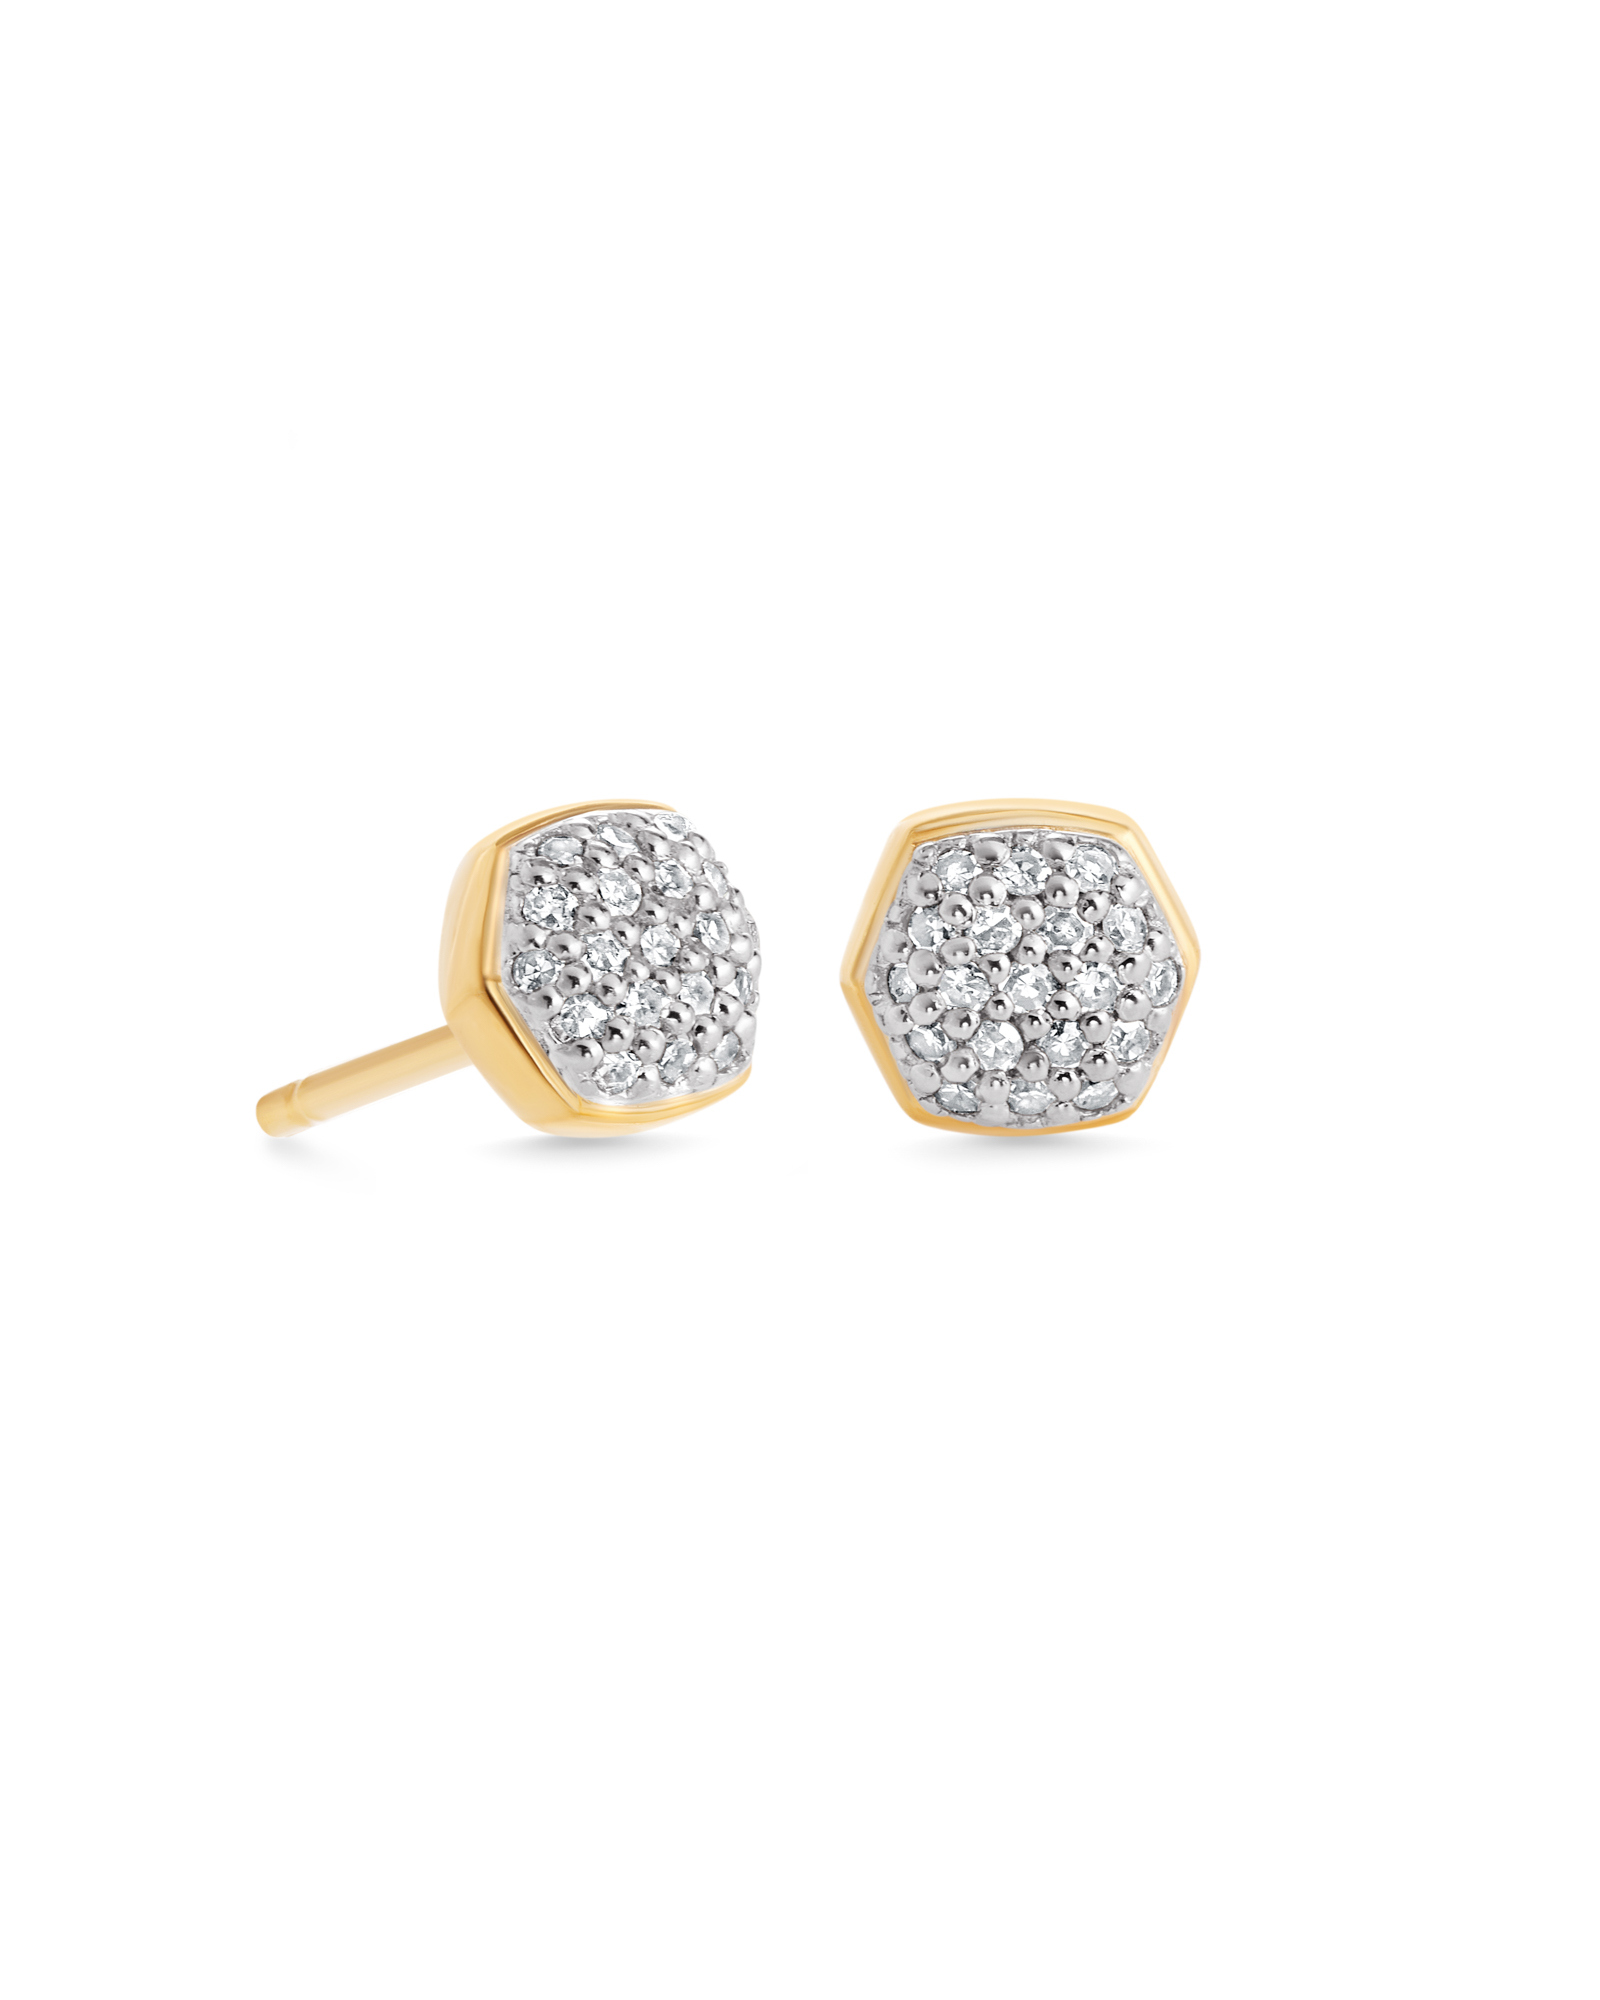 Diamond Stud Earrings: 1 Carat vs. 2 Carat - Which To Choose? | John Atencio